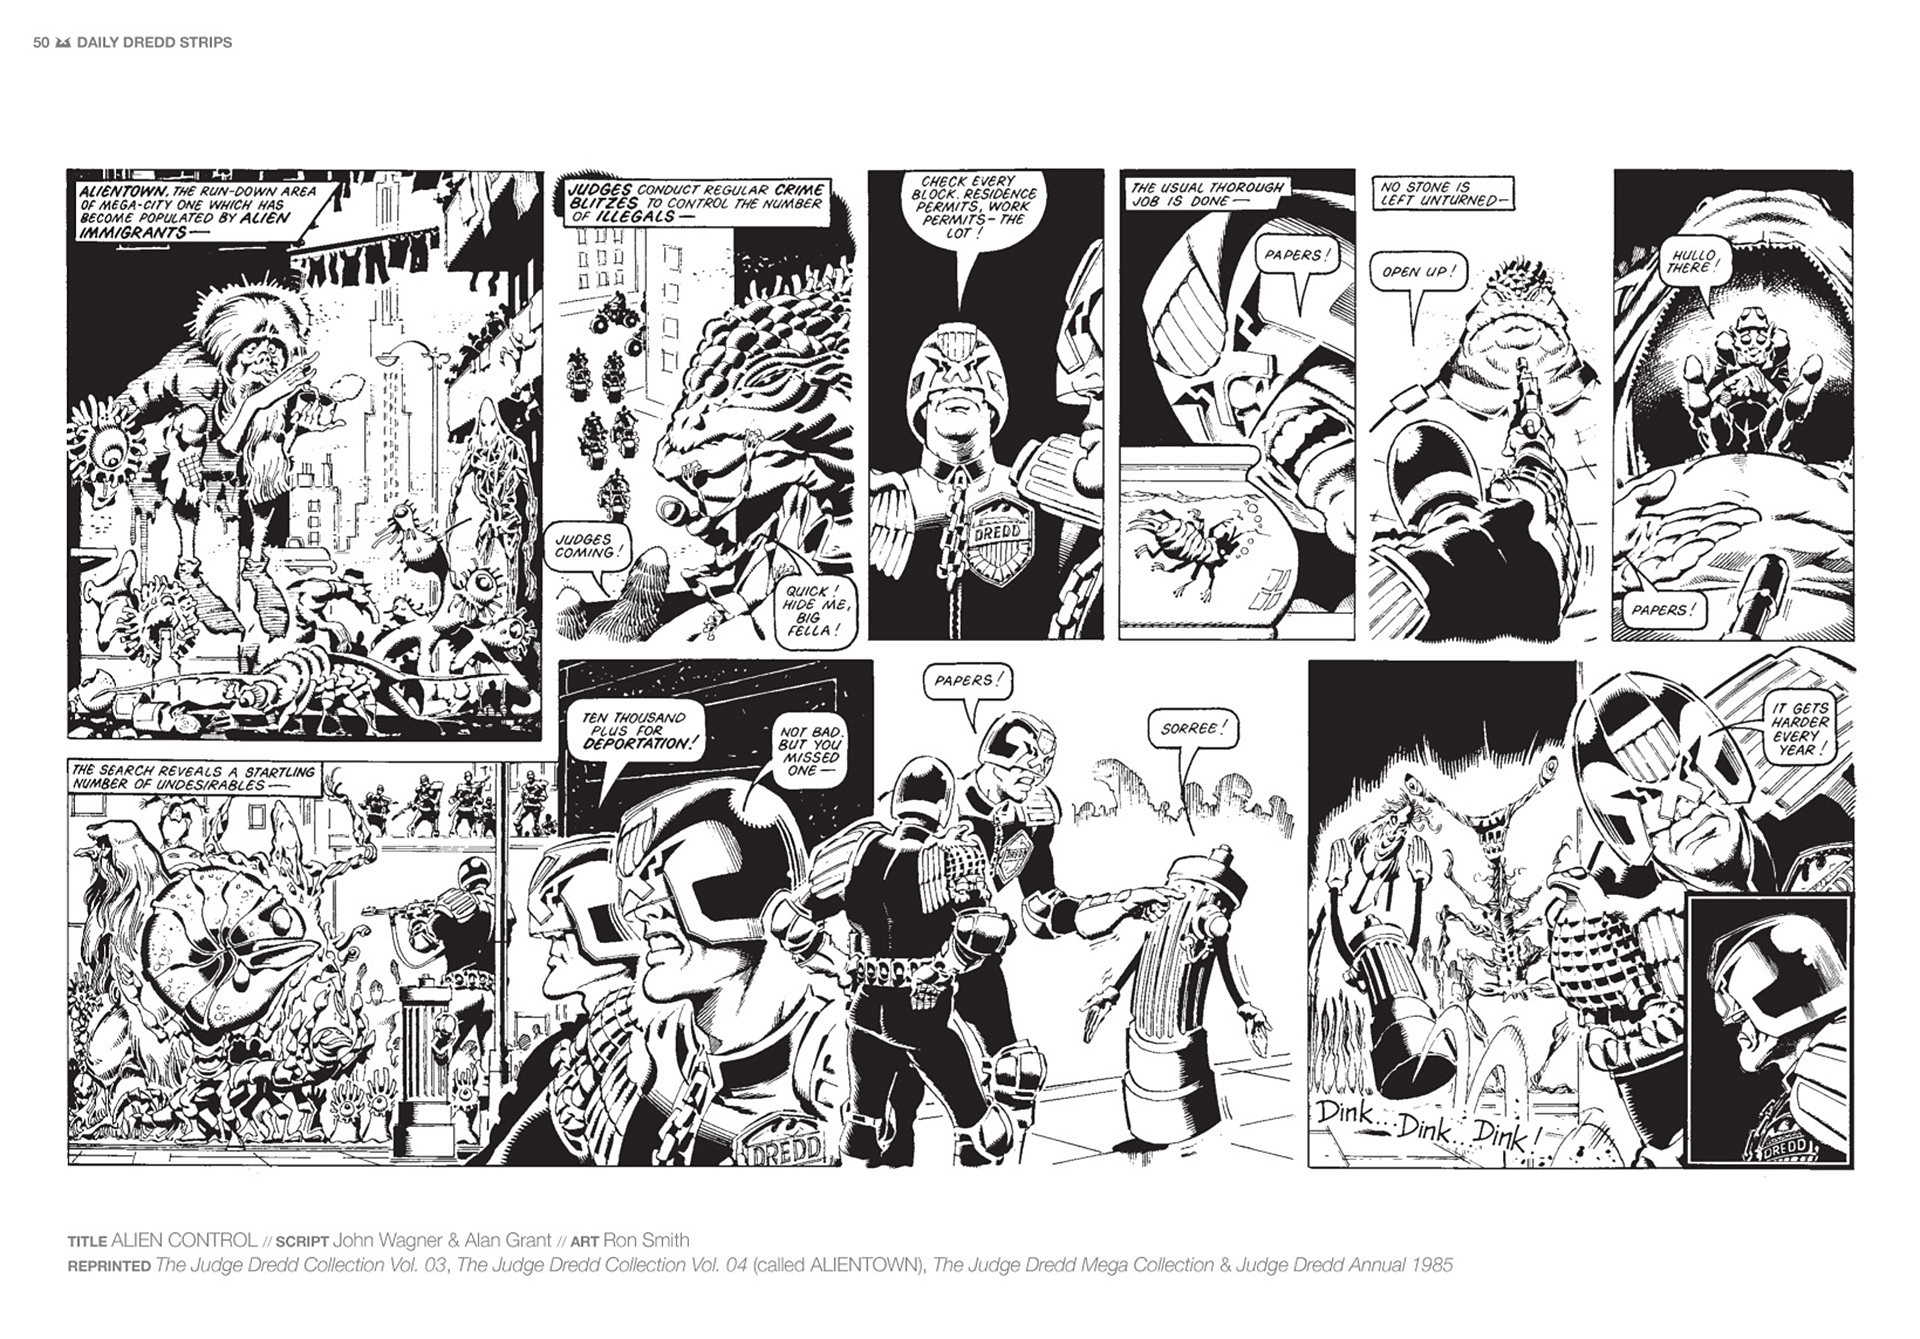 Read online Judge Dredd: The Daily Dredds comic -  Issue # TPB 1 - 53